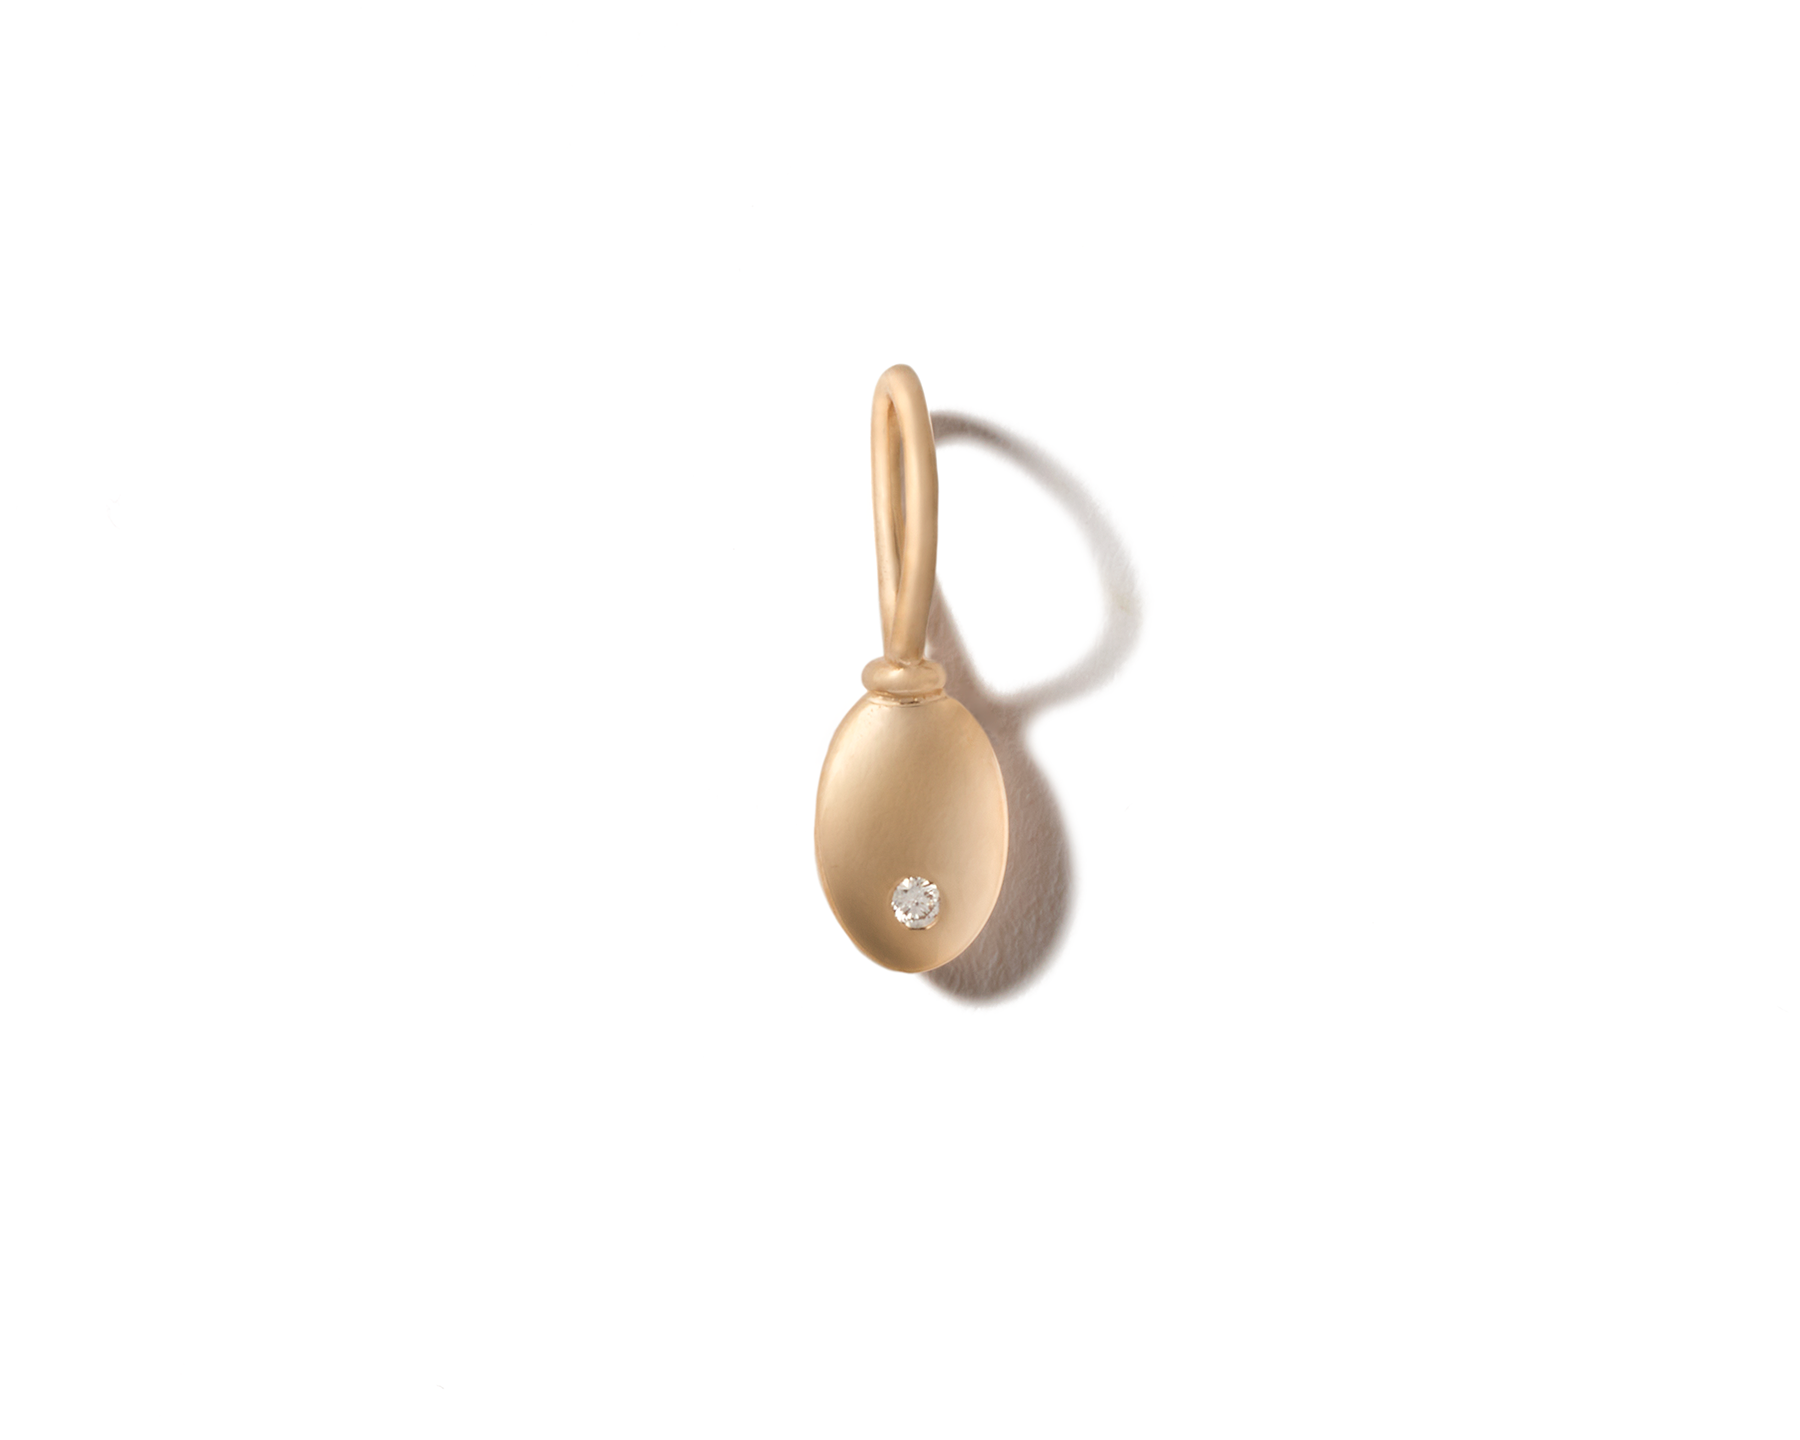 Oval tiny gold necklace charm